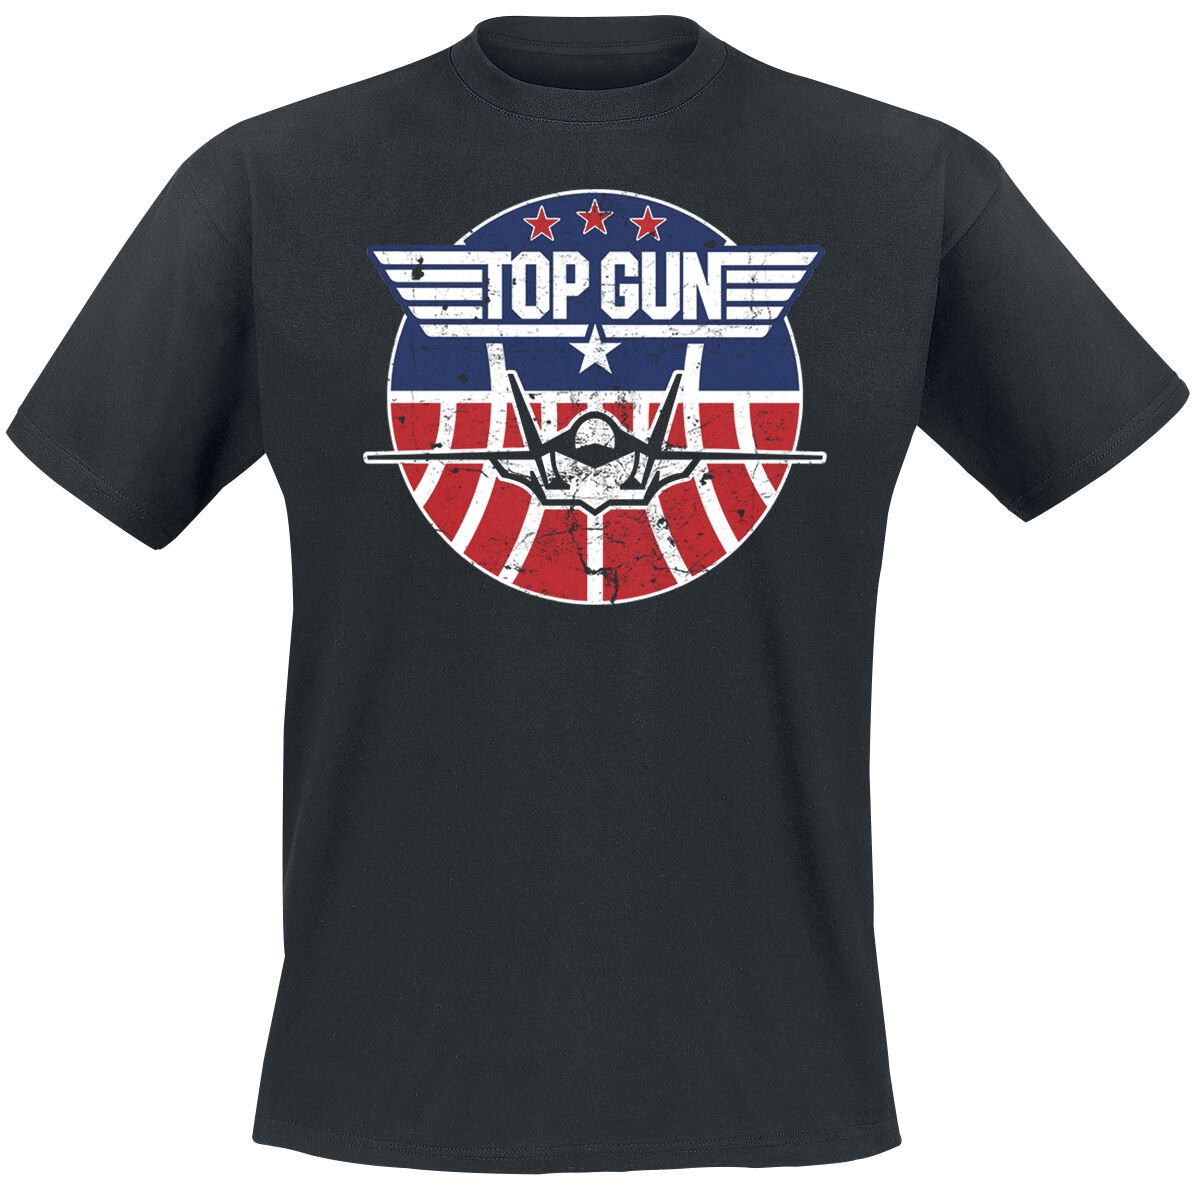 Top Gun T-Shirt - Maverick - Tomcat - S bis 5XL - für Männer - Größe XXL - schwarz  - Lizenzierter Fanartikel